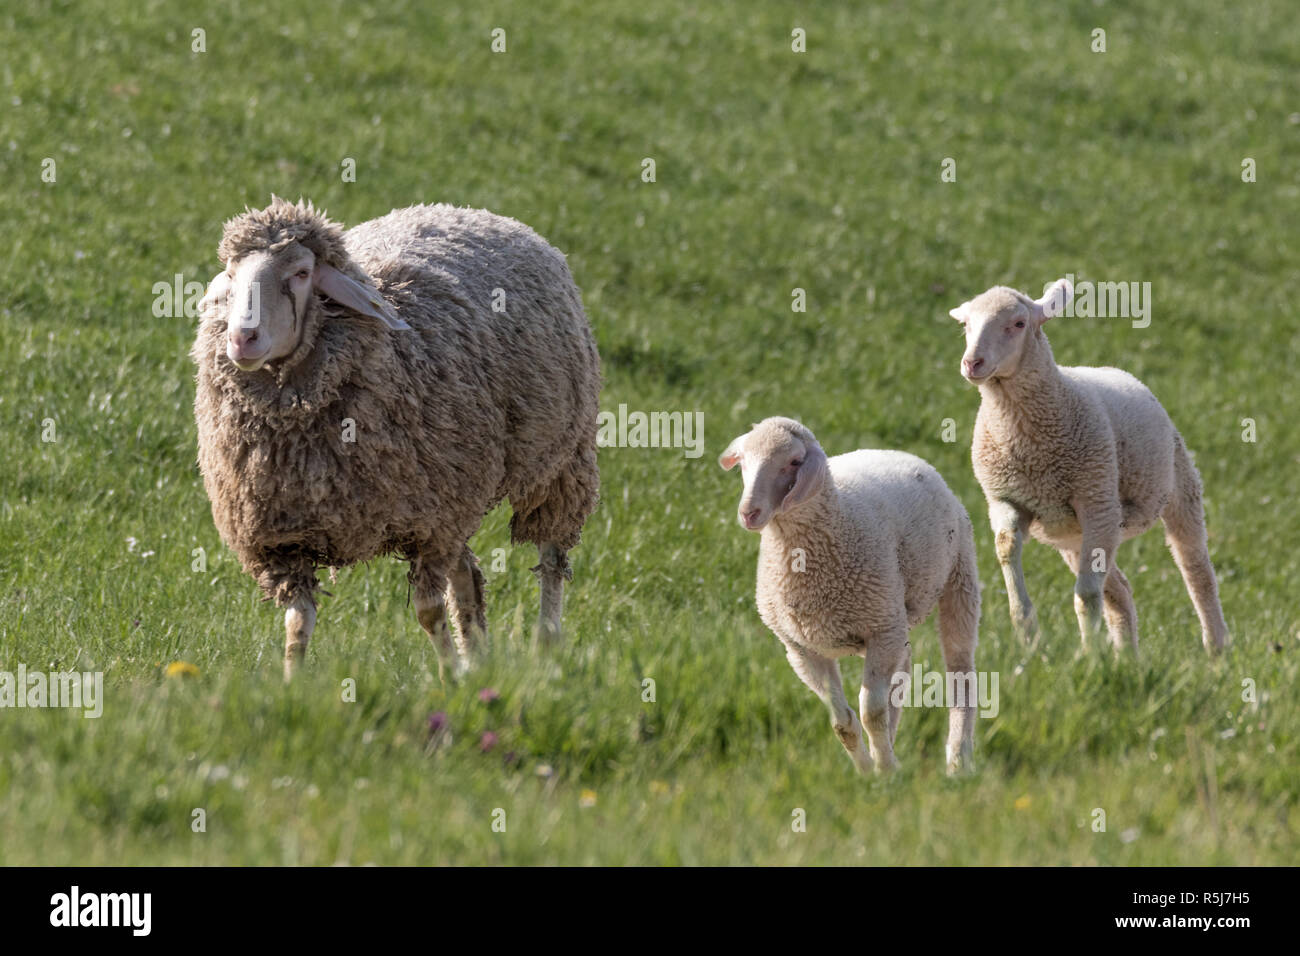 lambs run with a sheep Stock Photo